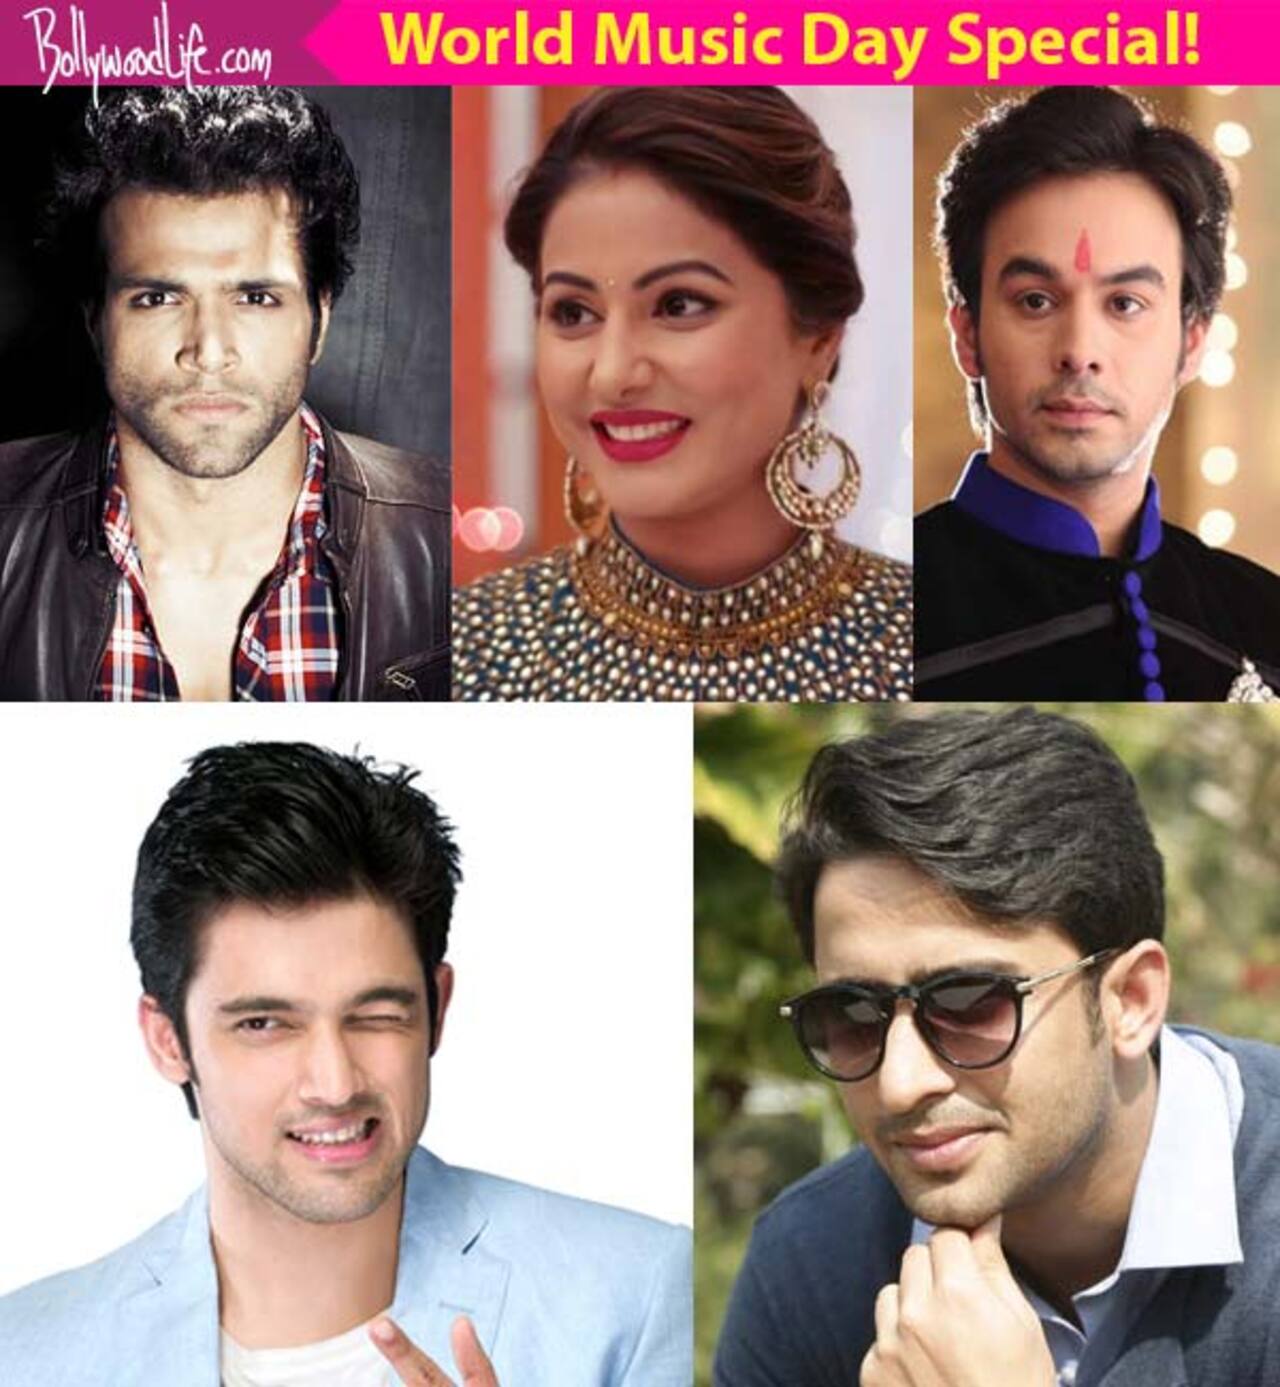 Shaheer Sheikh, Parth Samthaan, Hina Khan, Rithvik Dhanjani, Suyyash Rai- TV celebs with musical talents!